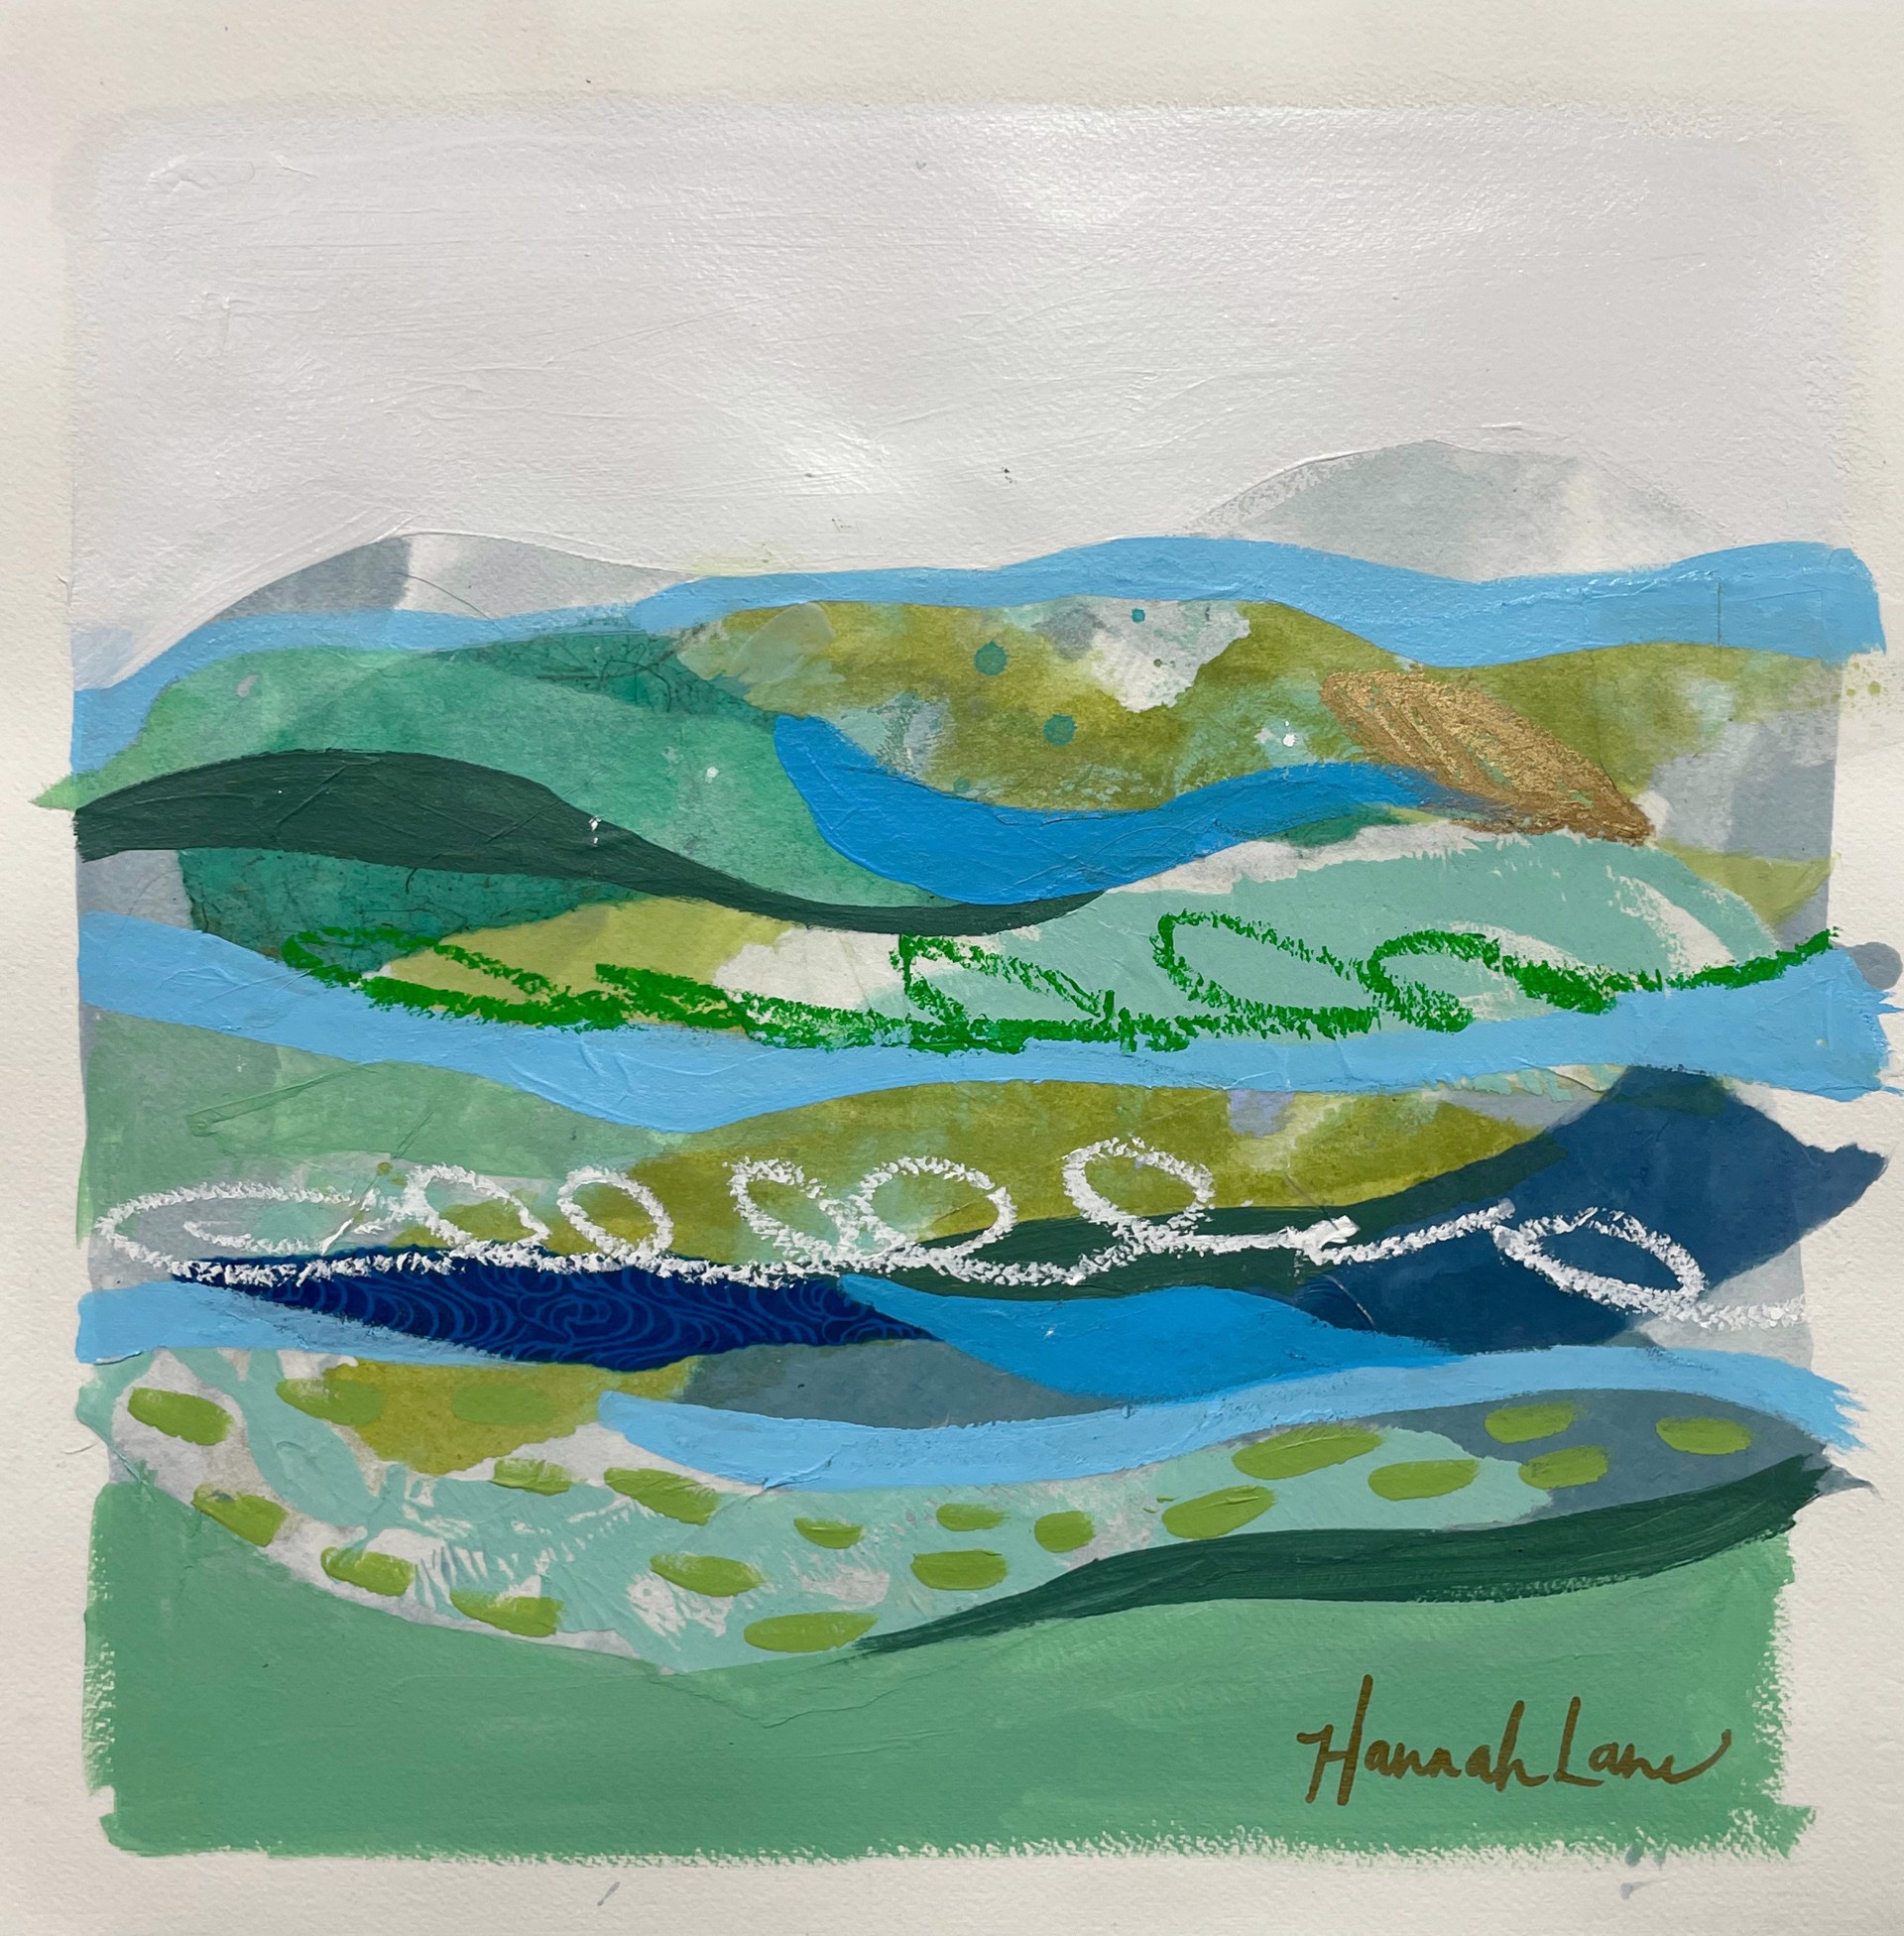 High Tide by Hannah Lane